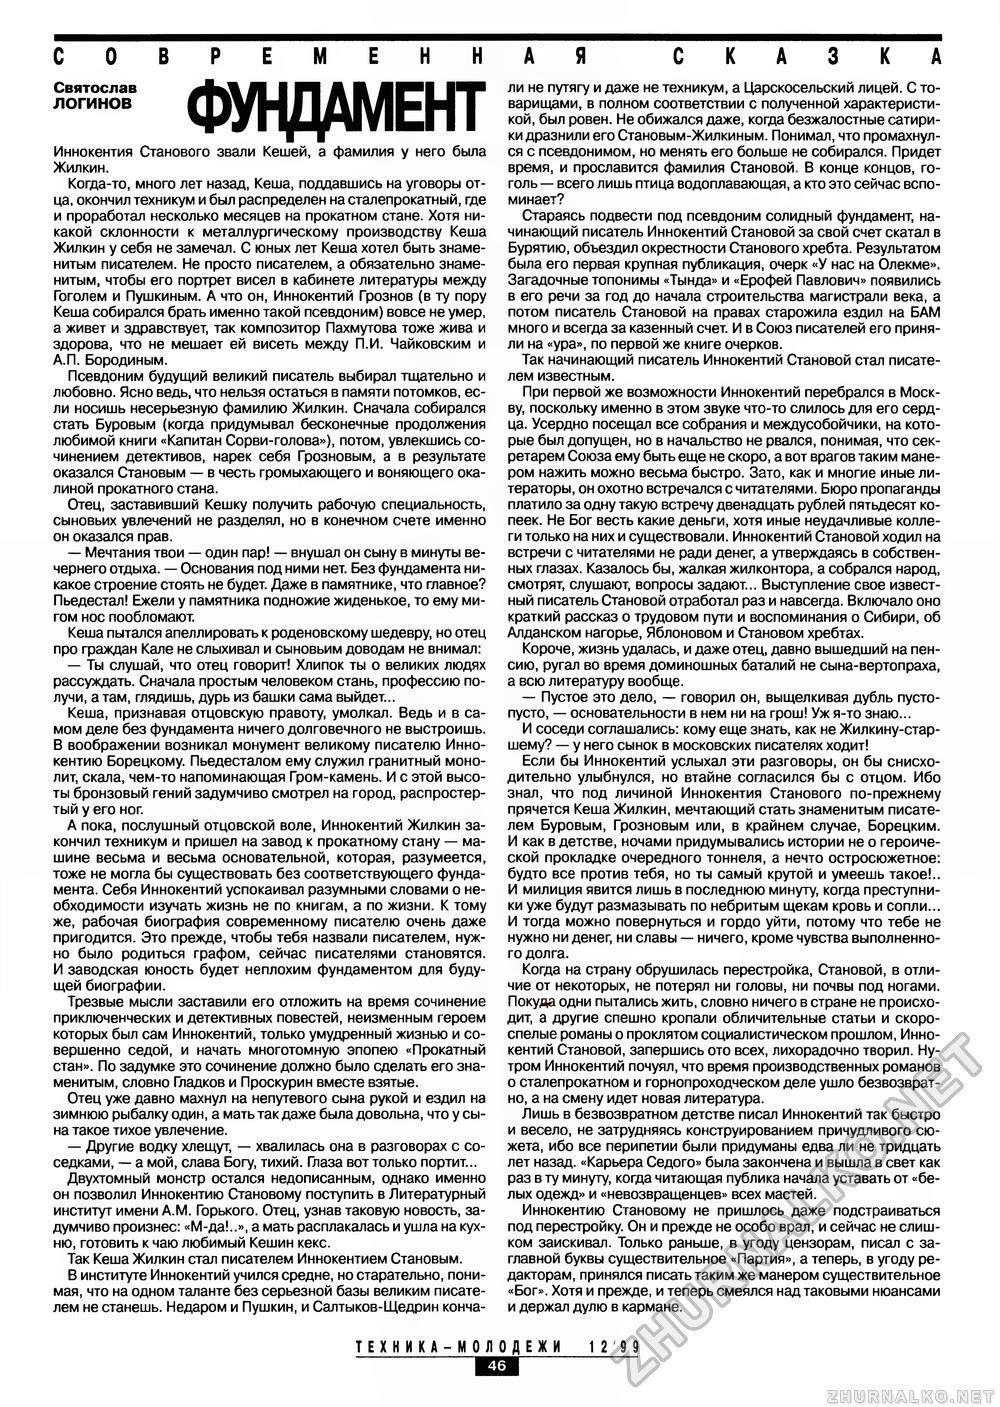 Техника - молодёжи 1999-12, страница 48